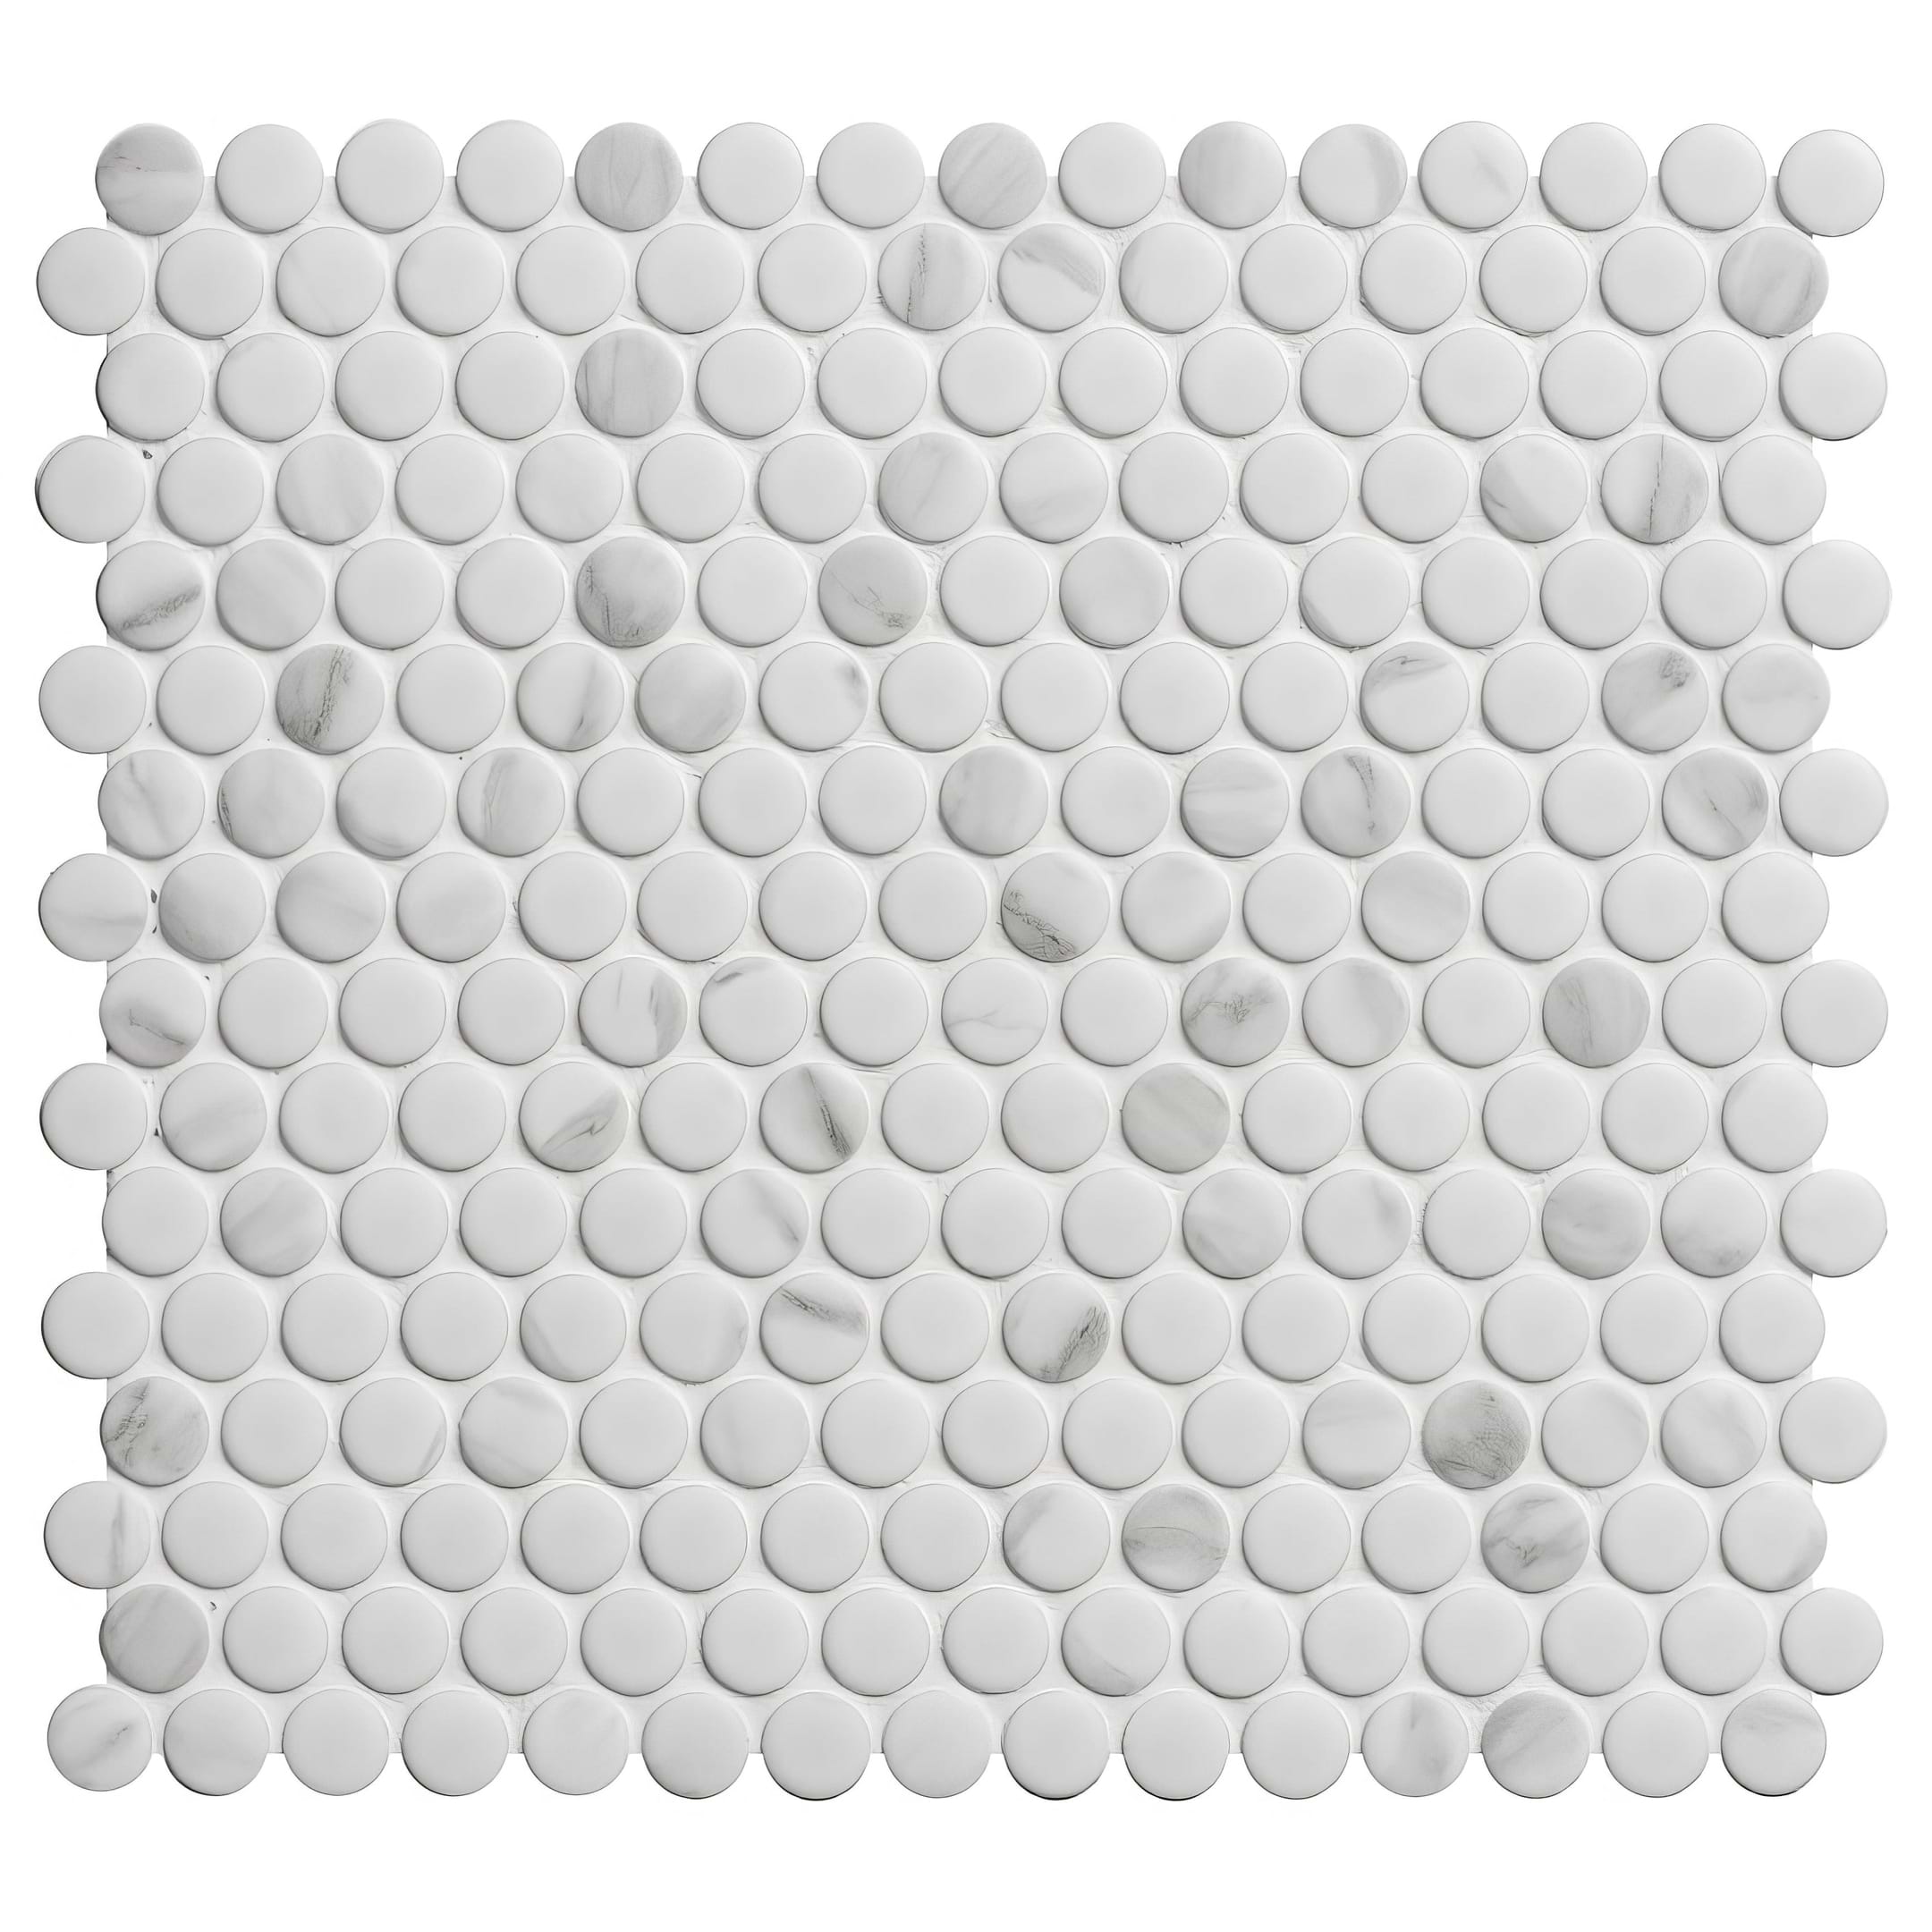 Penny Round Matt Carrara White - Hyperion Tiles